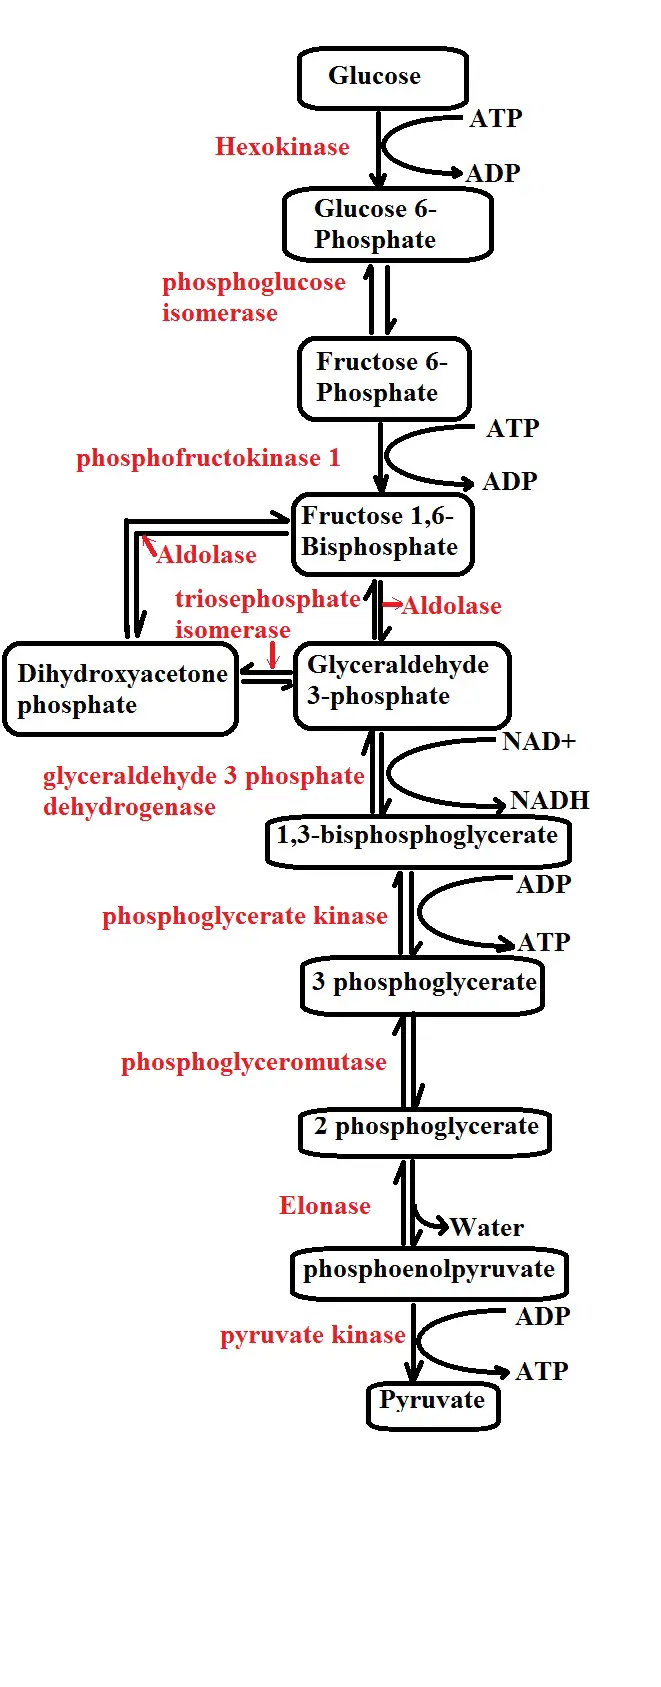 Glycolysis diagrammatic representation by MicroscopeMaster.com